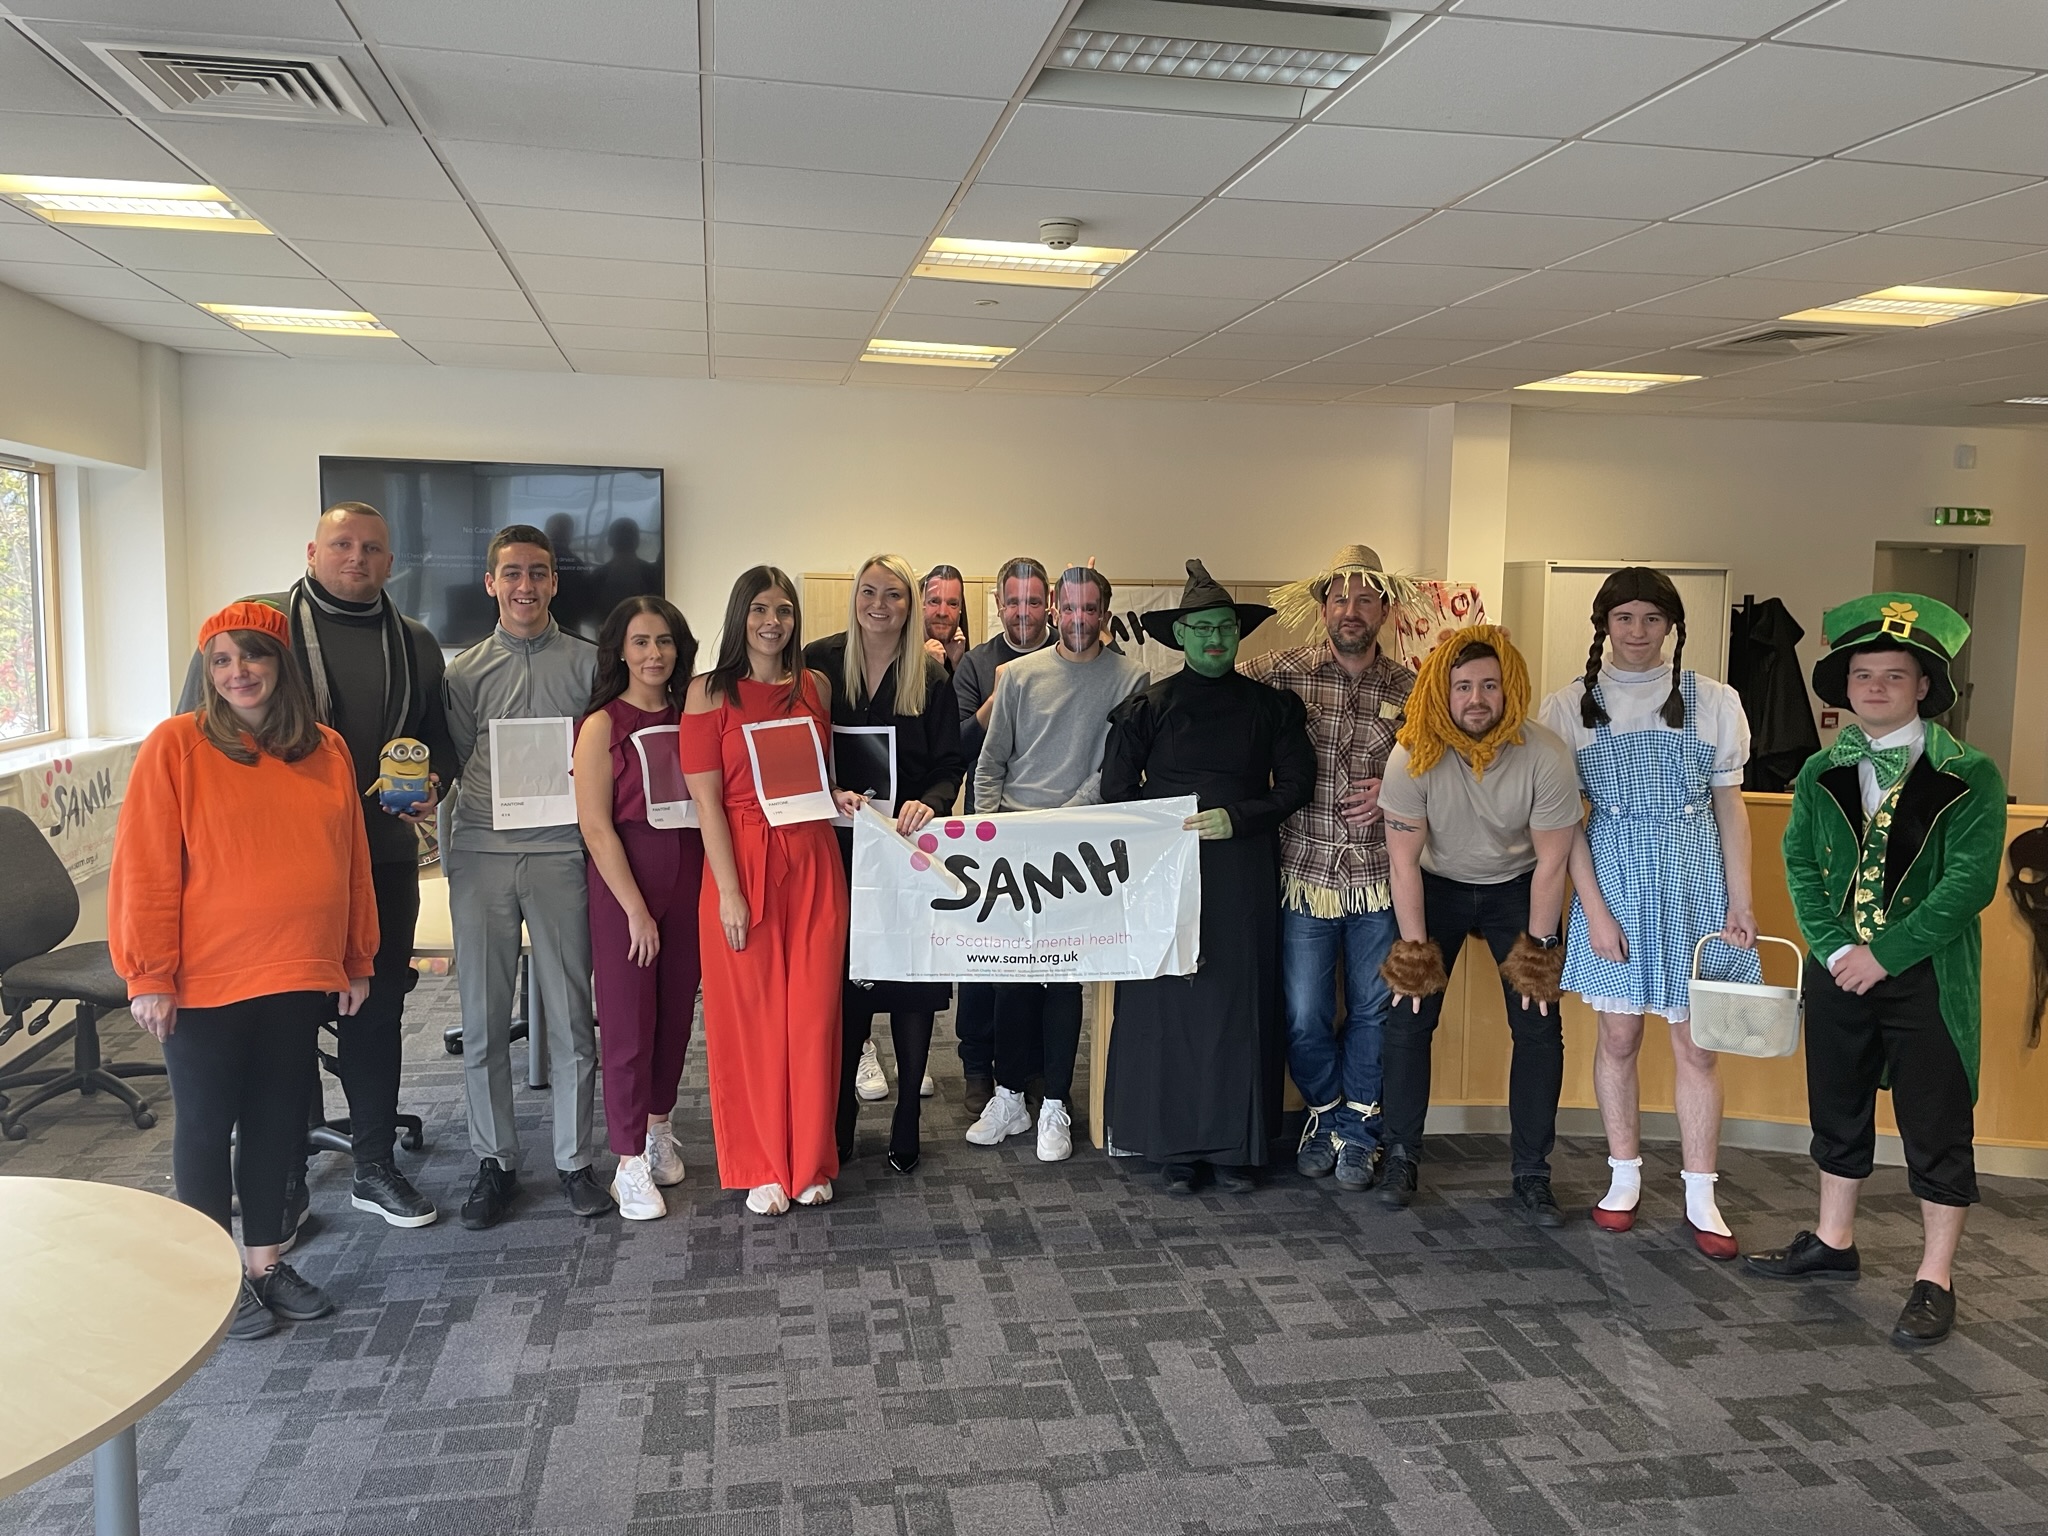 Clark Contracts raises £1,000 for SAMH with Halloween fundraiser